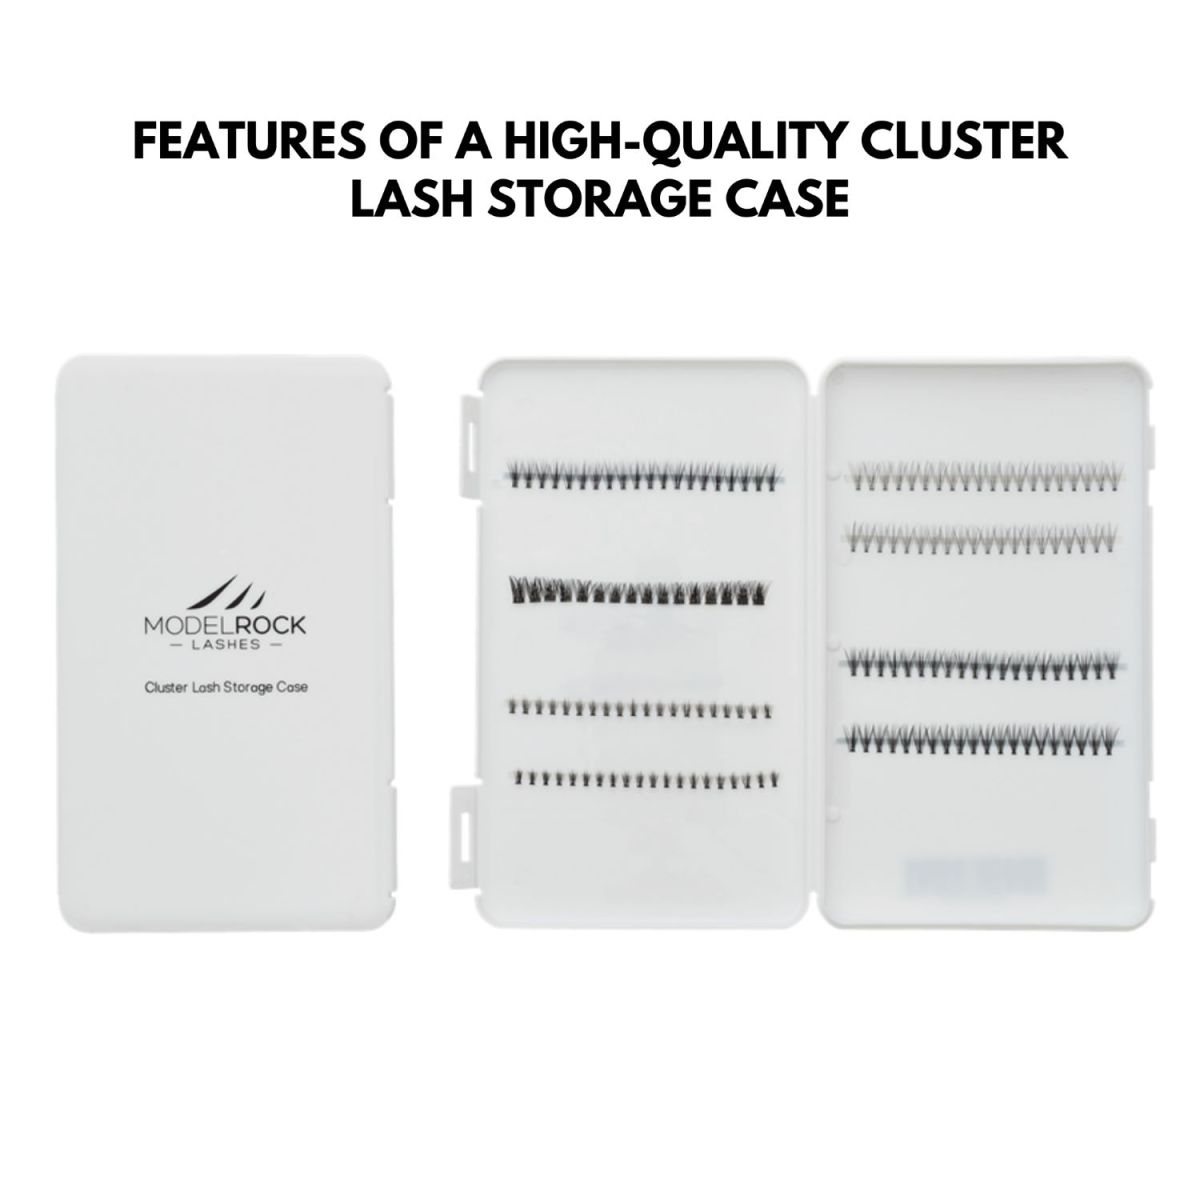 High-quality cluster lash storage case